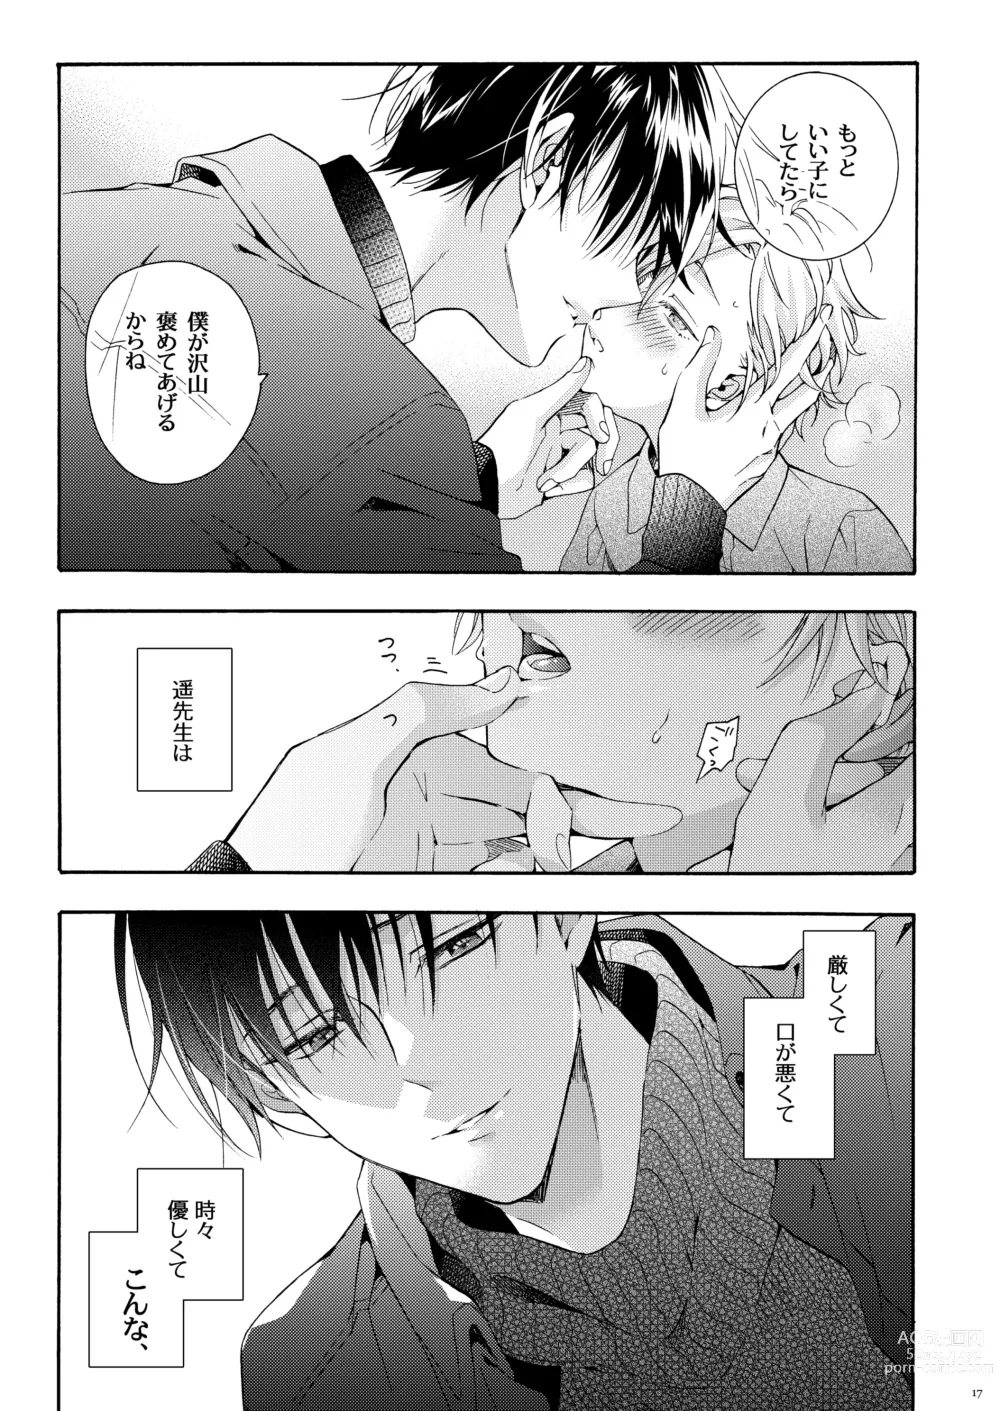 Page 16 of manga Boku no Tame no Omega